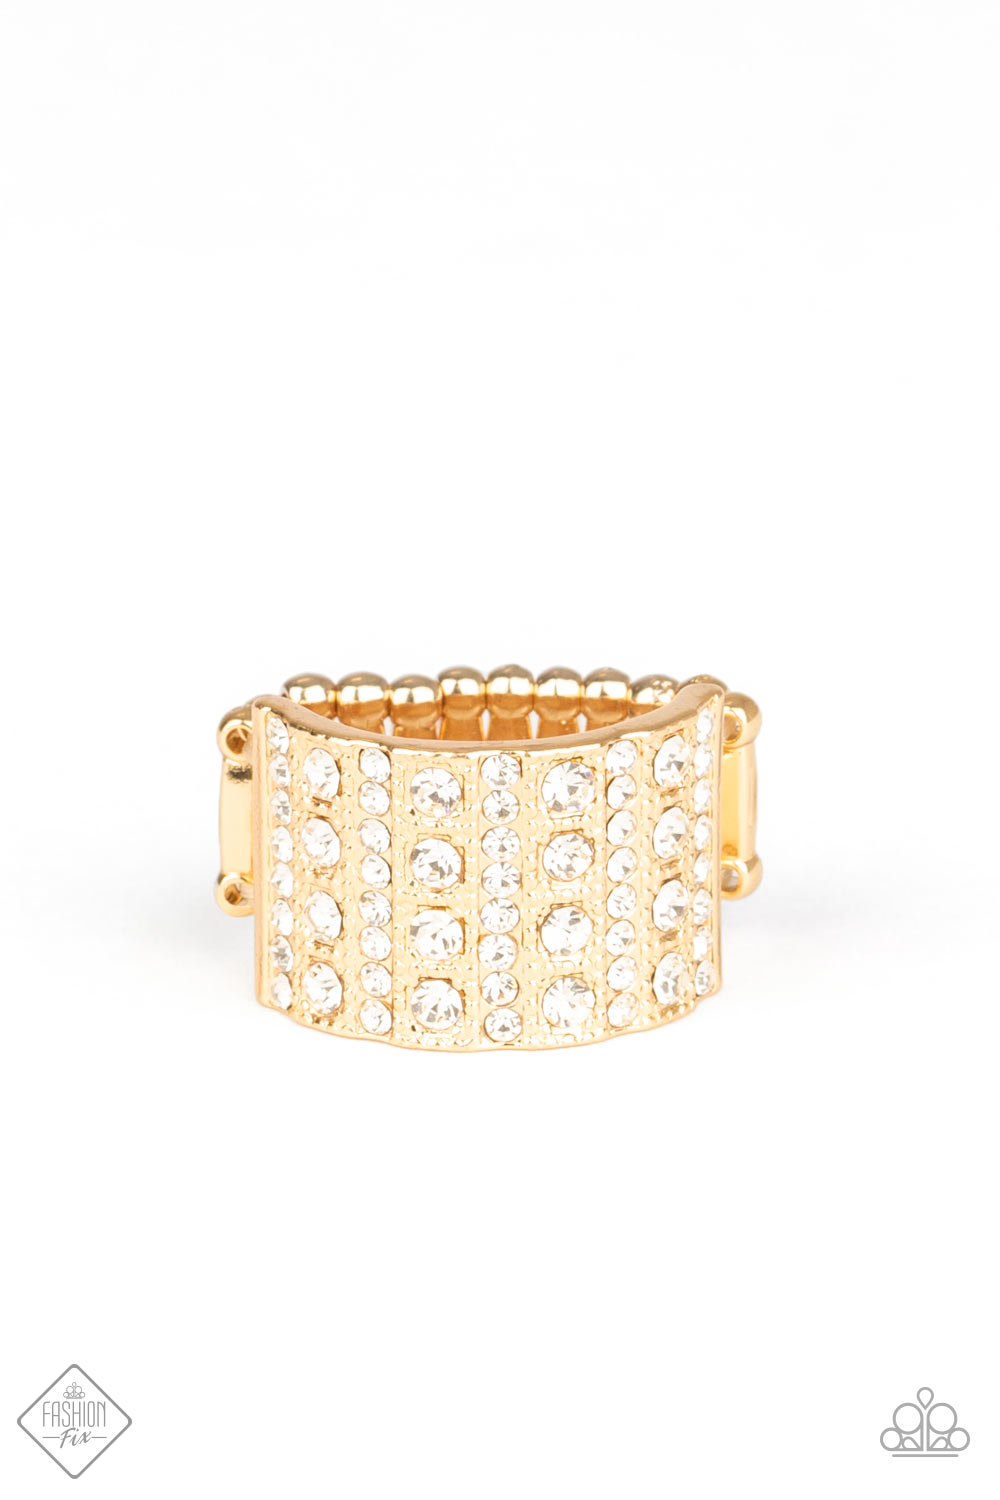 Paparazzi Accessories - Diamond Drama - Gold Ring Fashion Fix June 2020